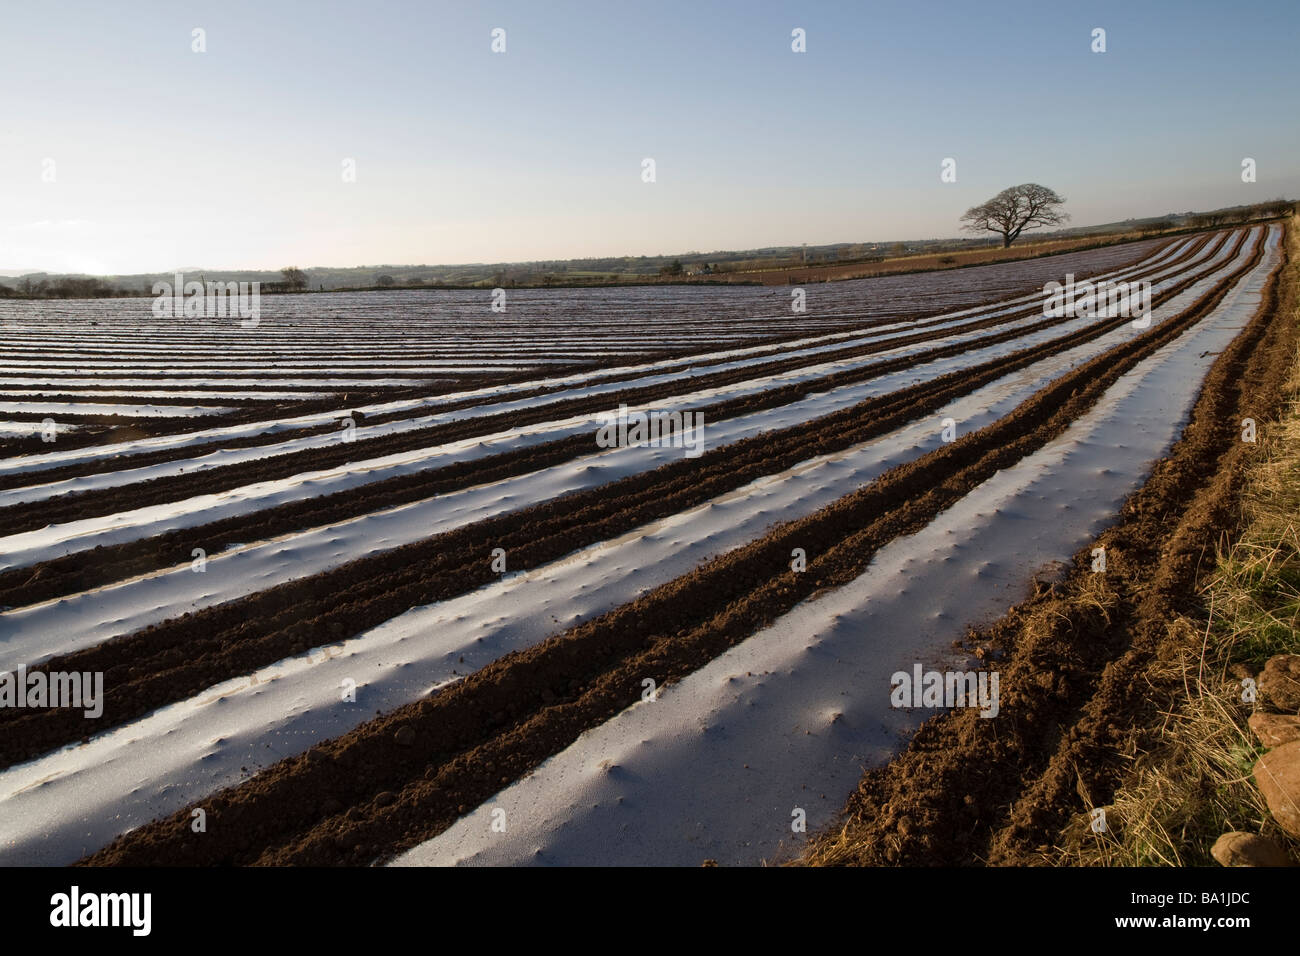 Gran campo con cultivos sembrados en hileras de plástico, Cumbria, Reino Unido Foto de stock